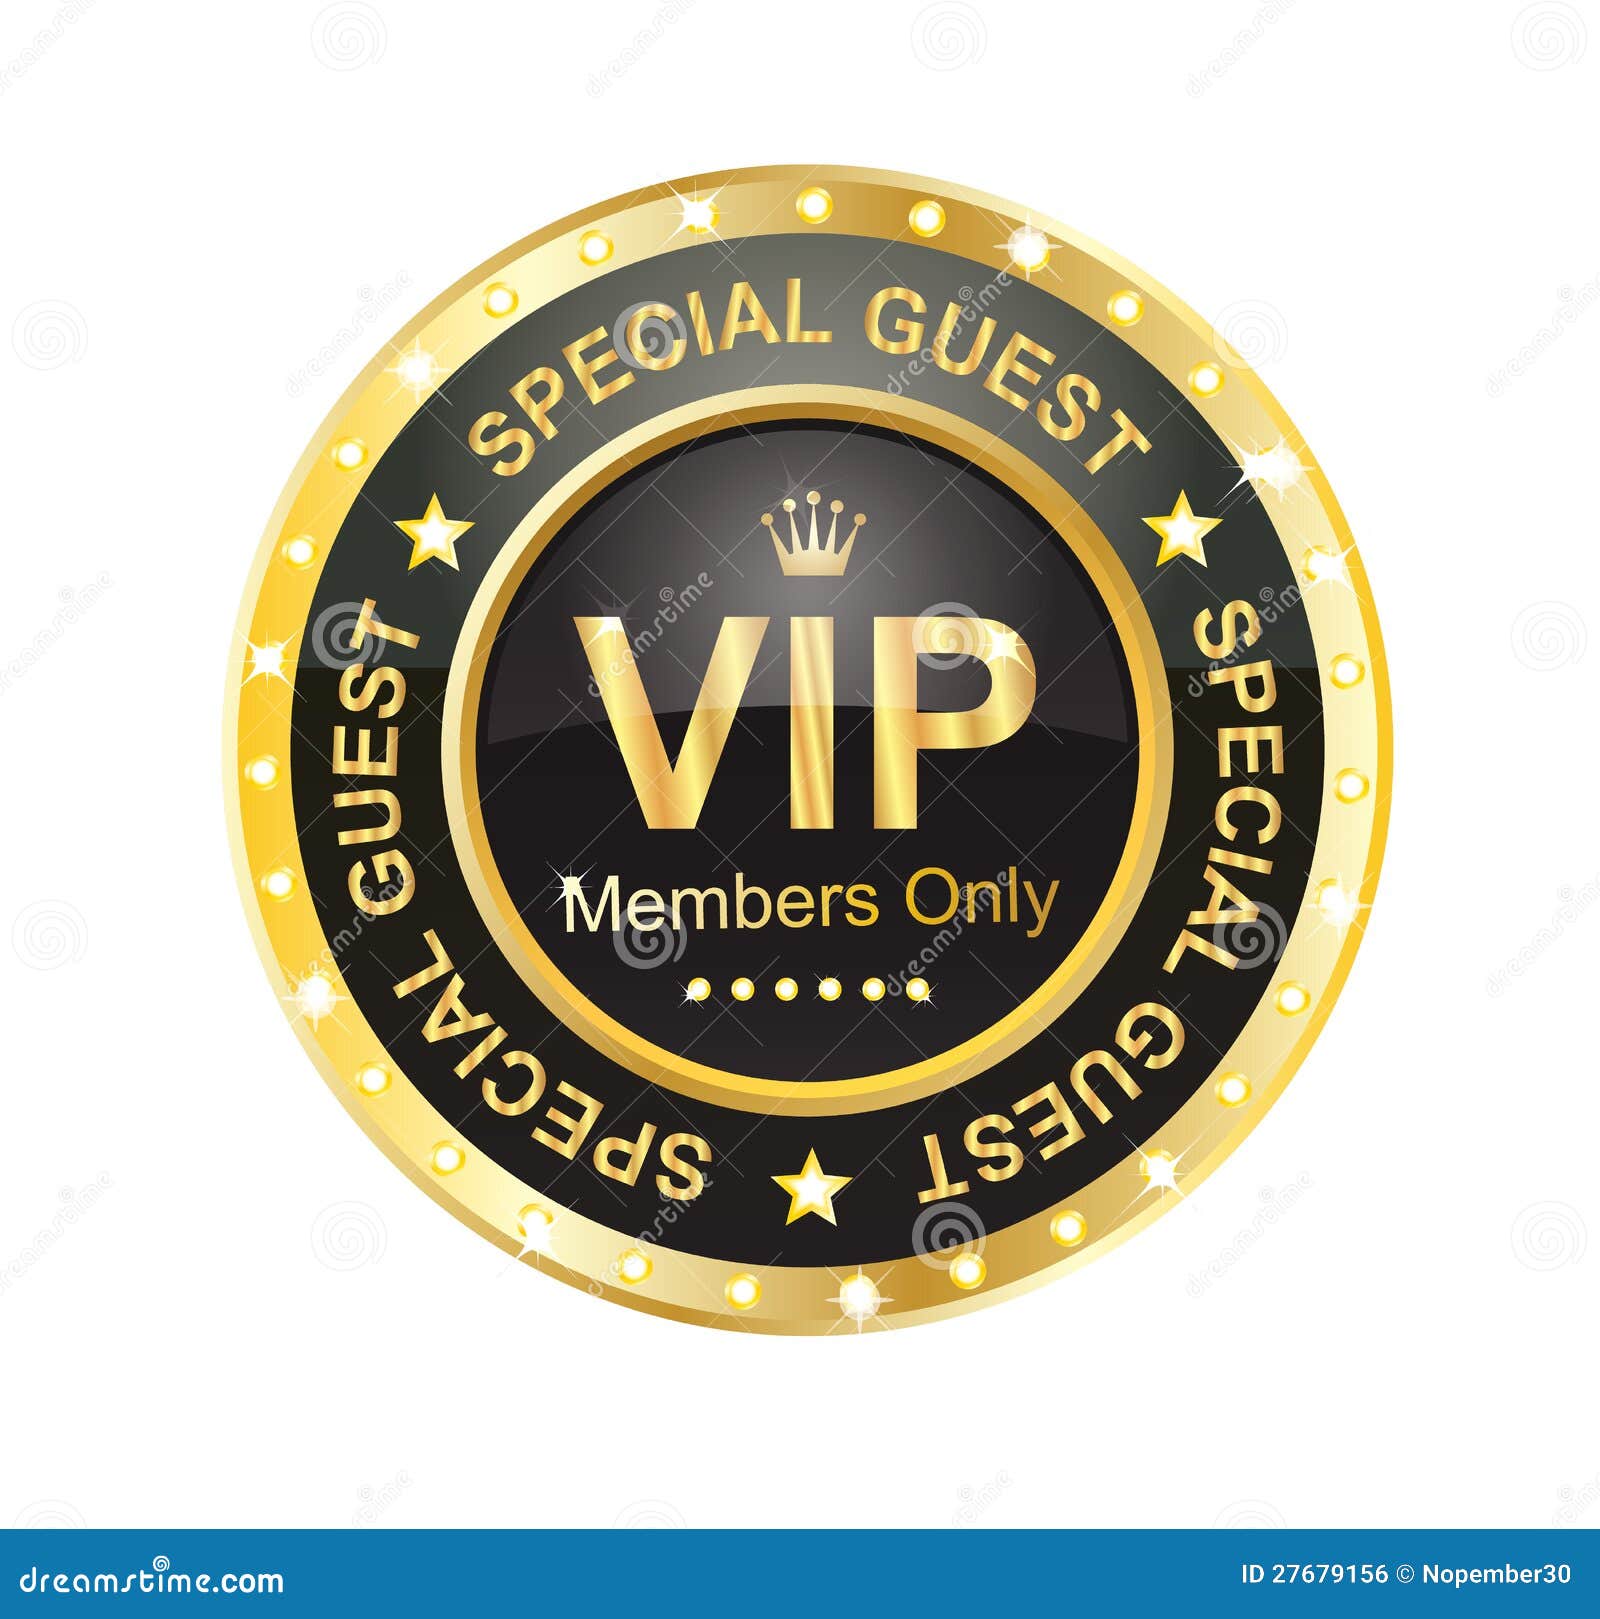 VIP Label Royalty Free Stock Image - Image: 27679156